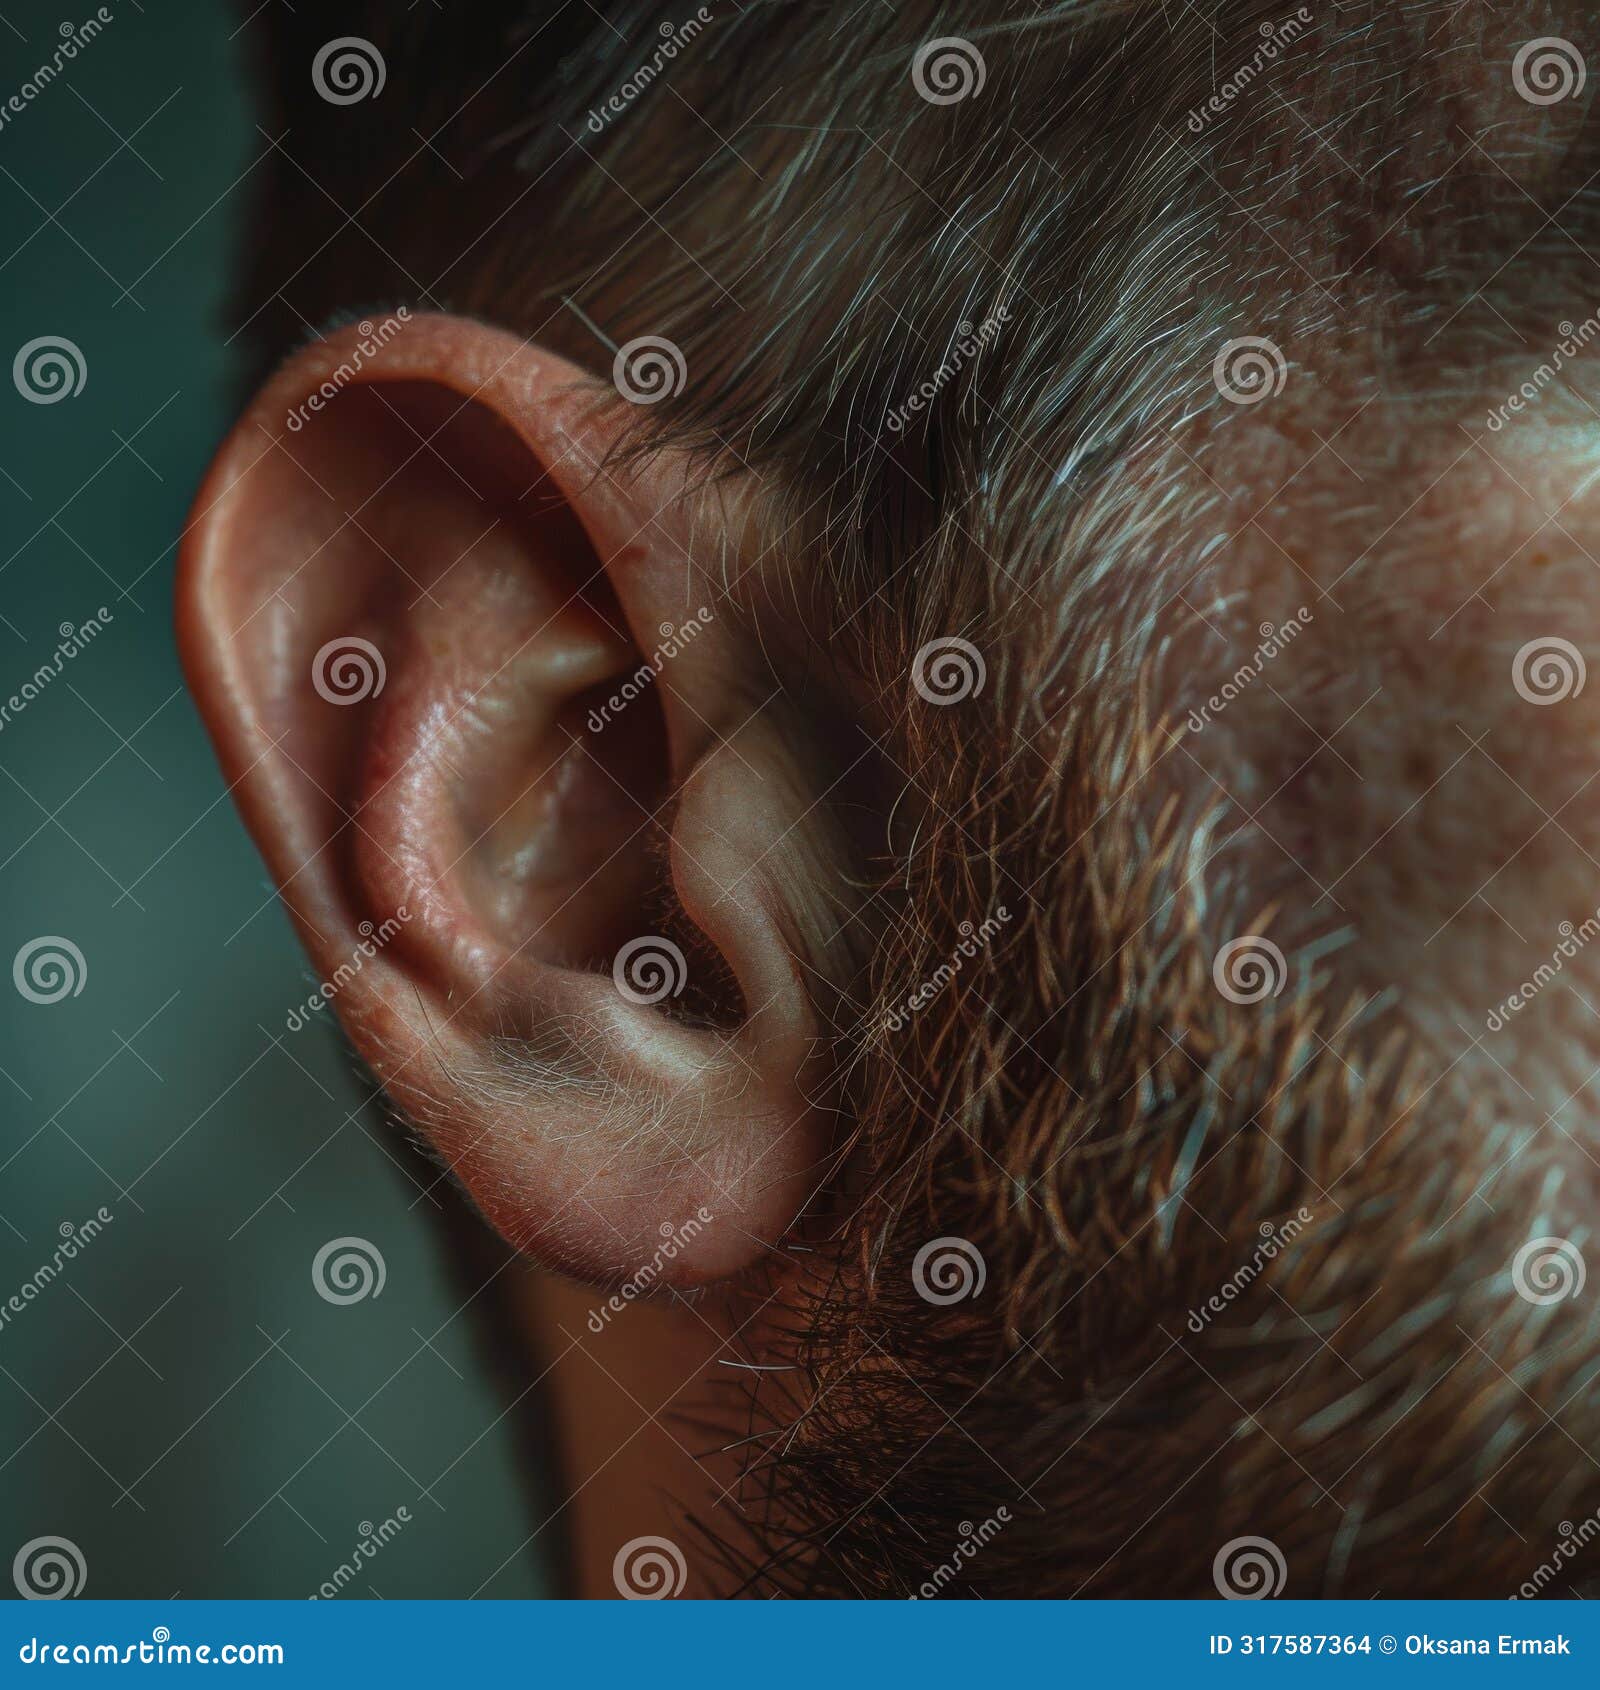 human ear closeup, male ear macro photo, detailed human auricle anatomy, auditory organ, wiretapping